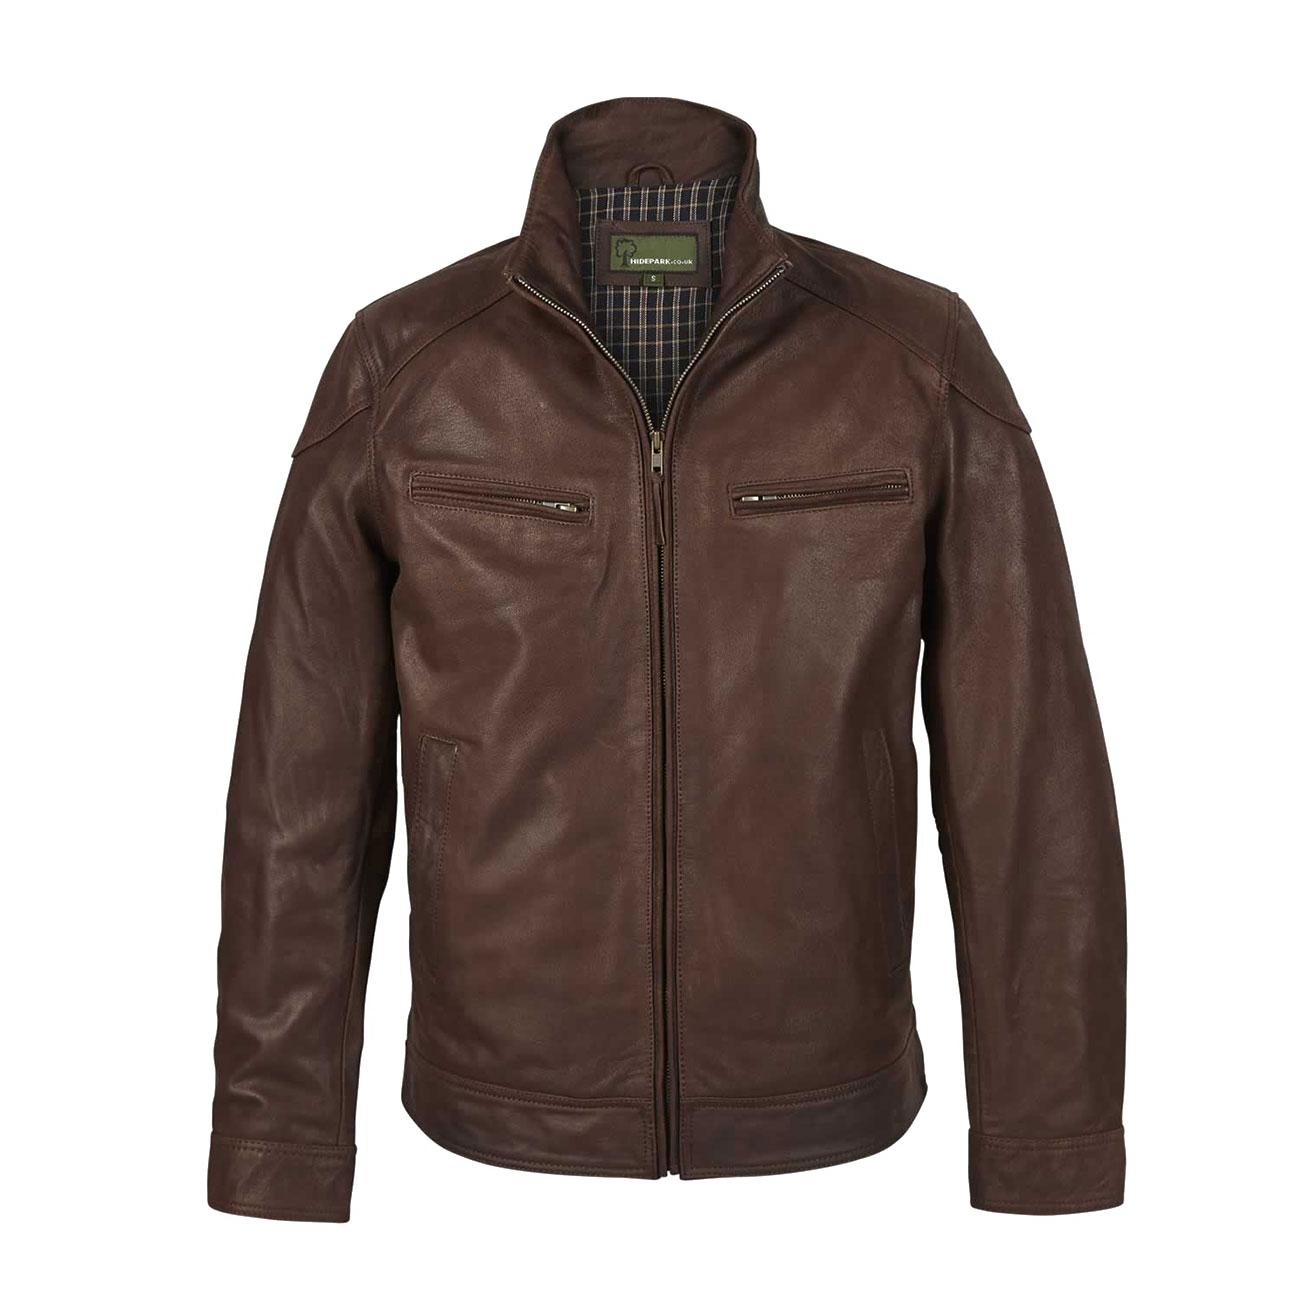 Brown Leather Jacket Transparent Images